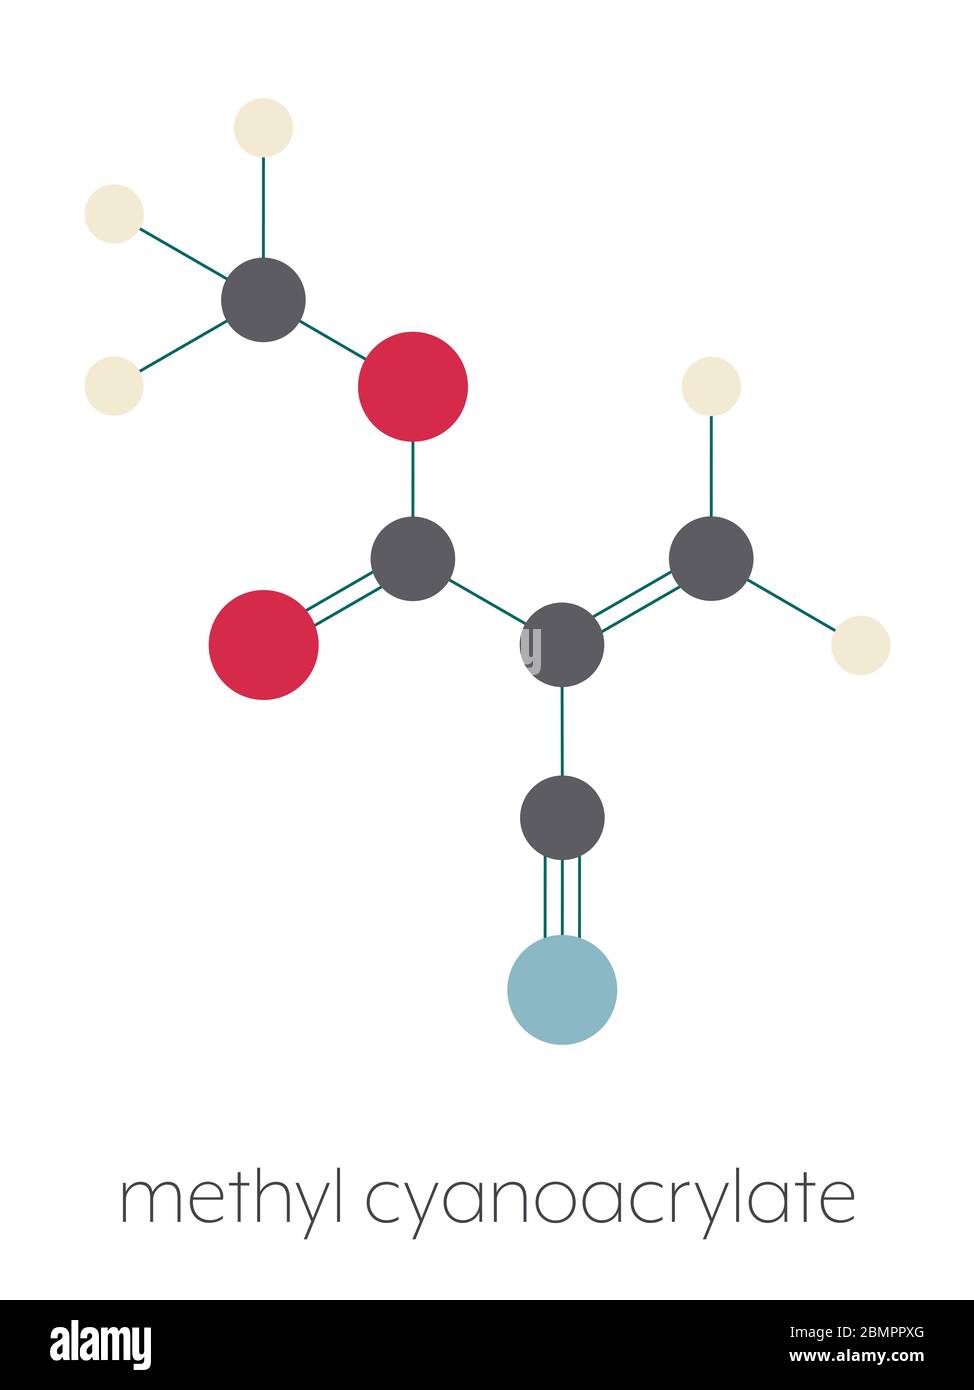 Methyl cyanoacrylate molecule, the main component of cyanoacrylate glues (instant glue). Stock Photo